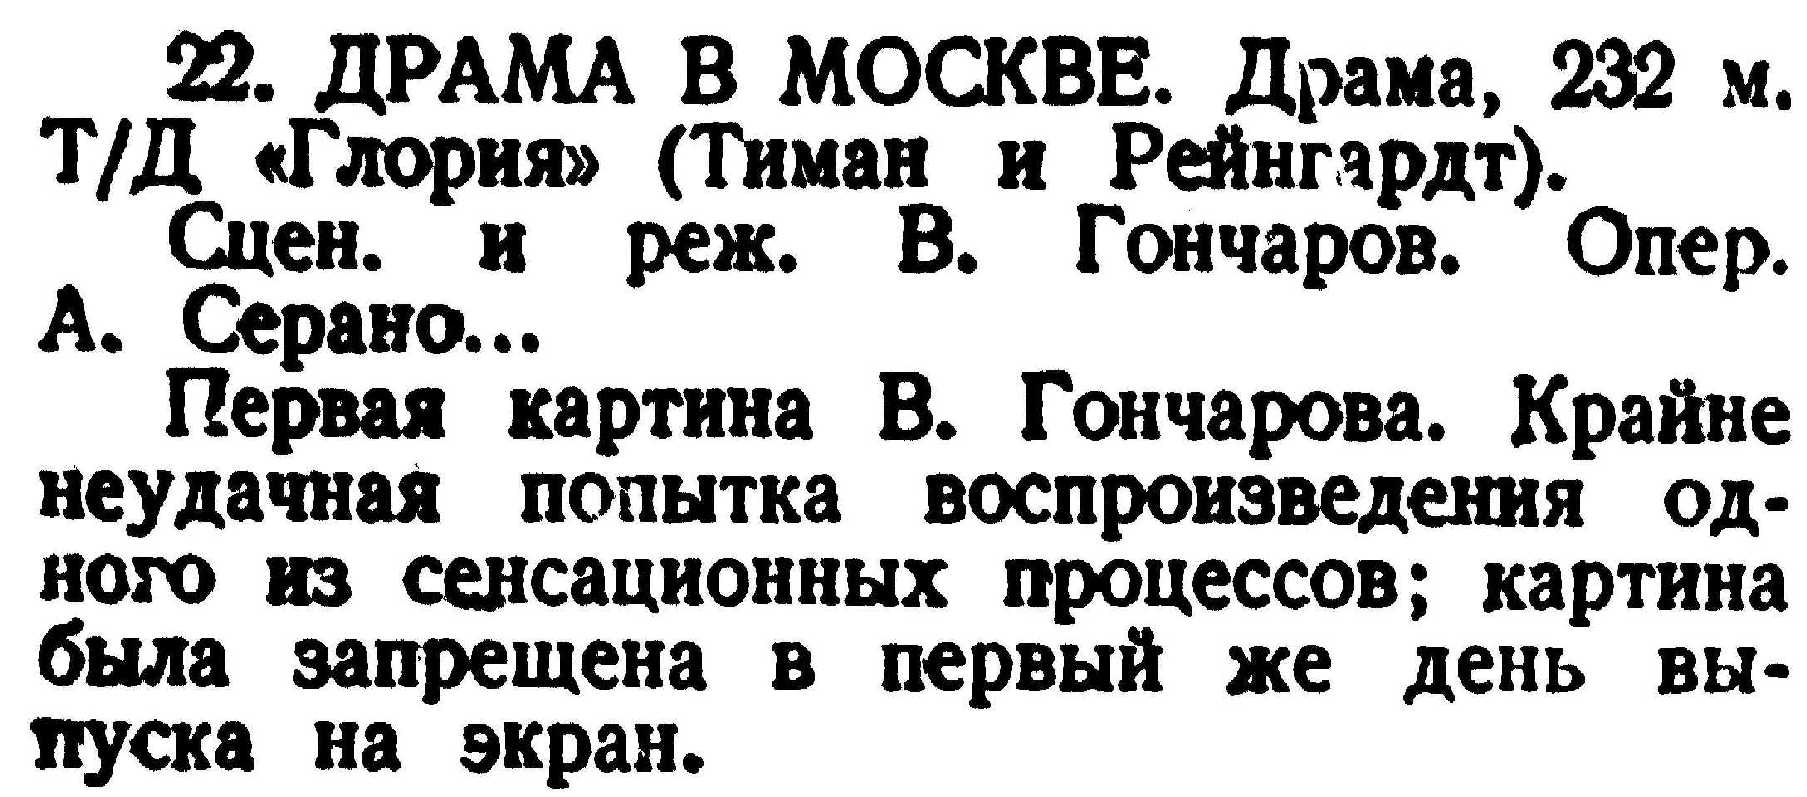 Entry for the 1909 silent film Drama v Moskve.